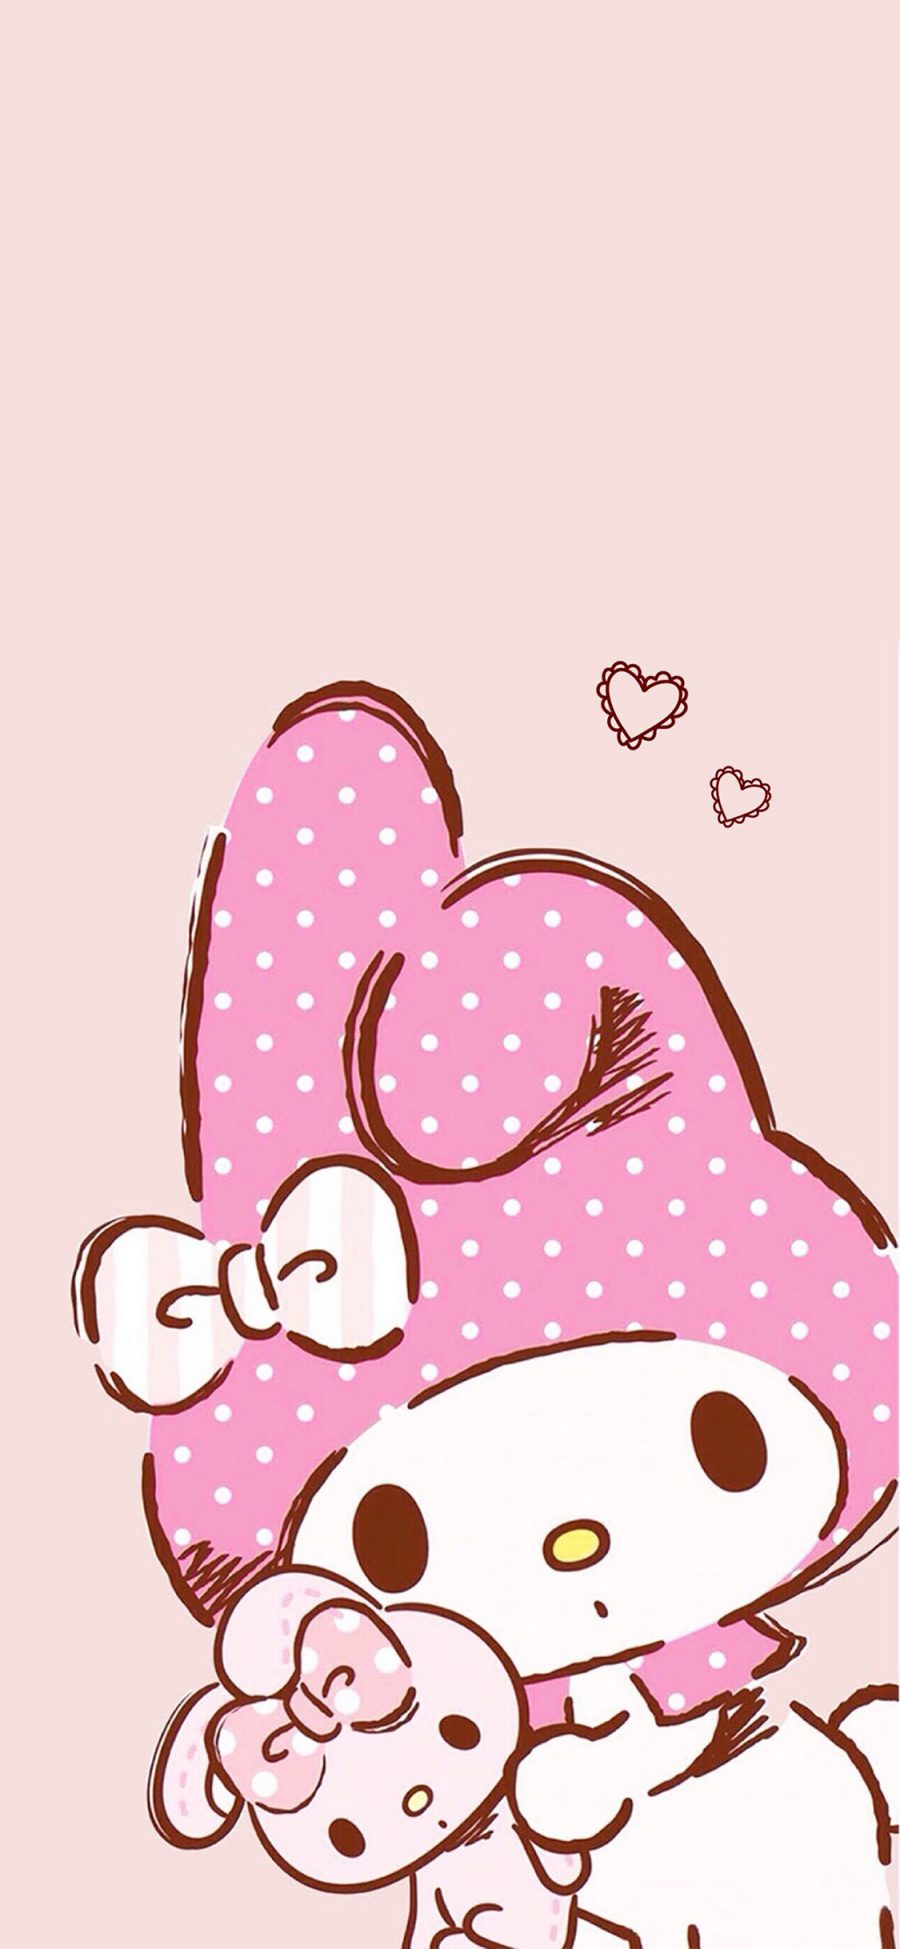 [2436×1125]Melody 美乐蒂 日本动漫 可爱 少女 粉色 爱心 蝴蝶结 兔子 苹果手机动漫壁纸图片